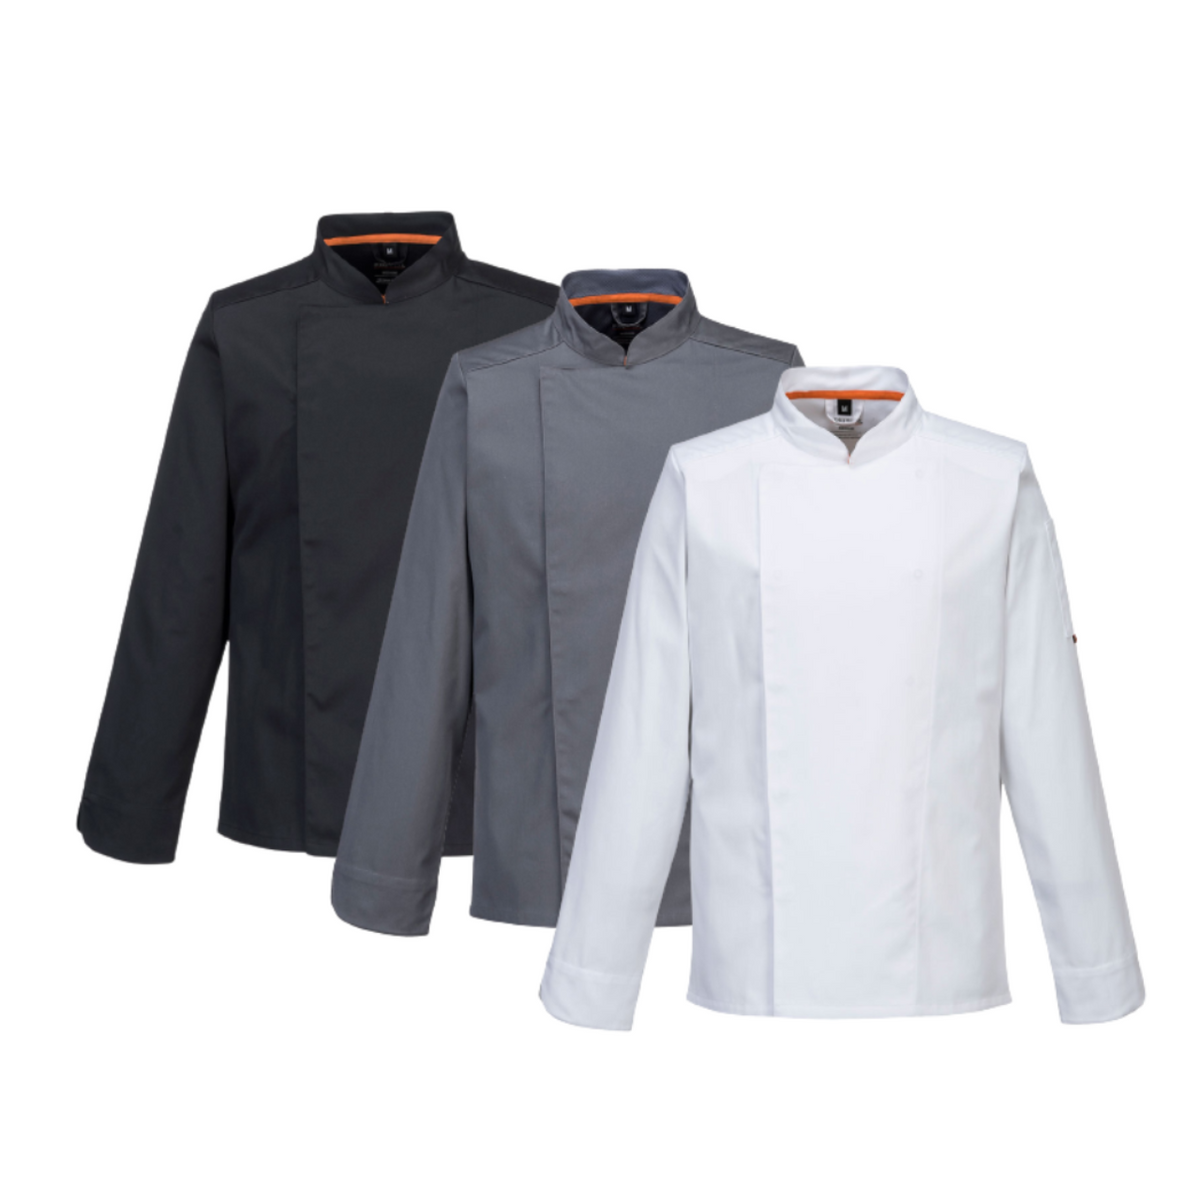 Portwest MeshAir Pro Jacket L/S Lighweight Slim Fit Chef Jacket Comfy C838-Collins Clothing Co